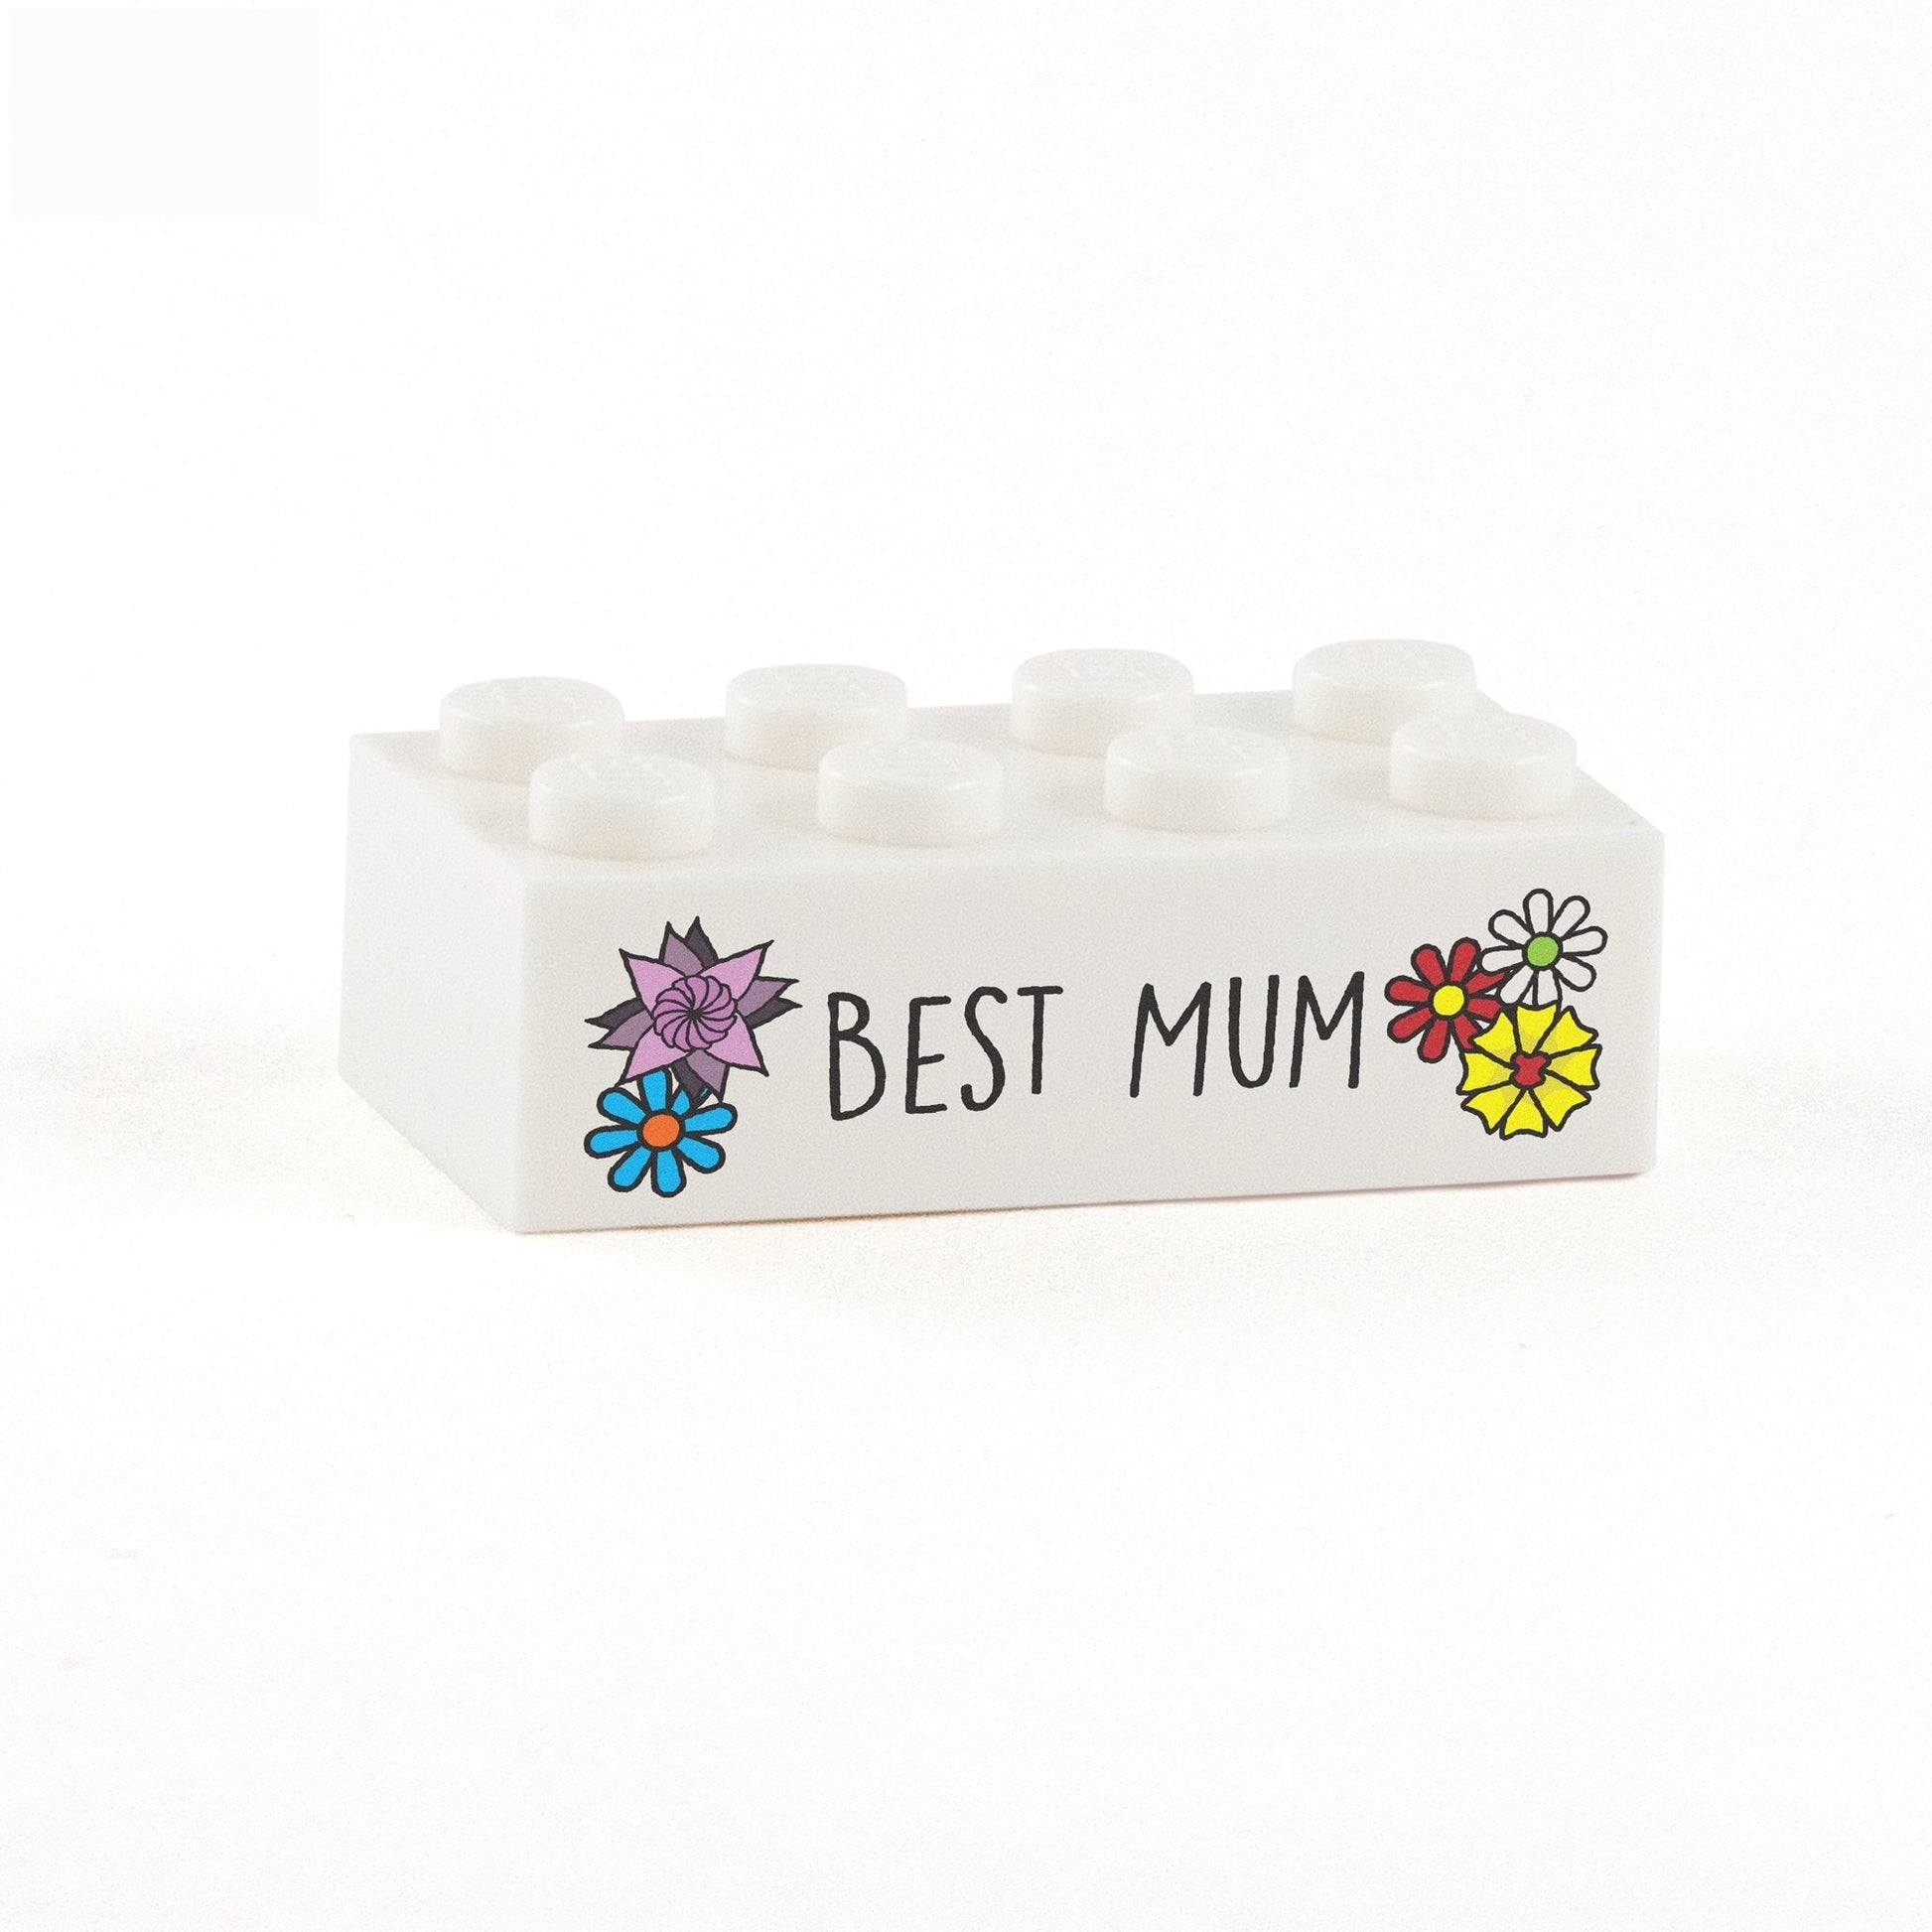 Best Mum Display Brick - Custom Printed 2x4 LEGO Brick, Minifigure Stand